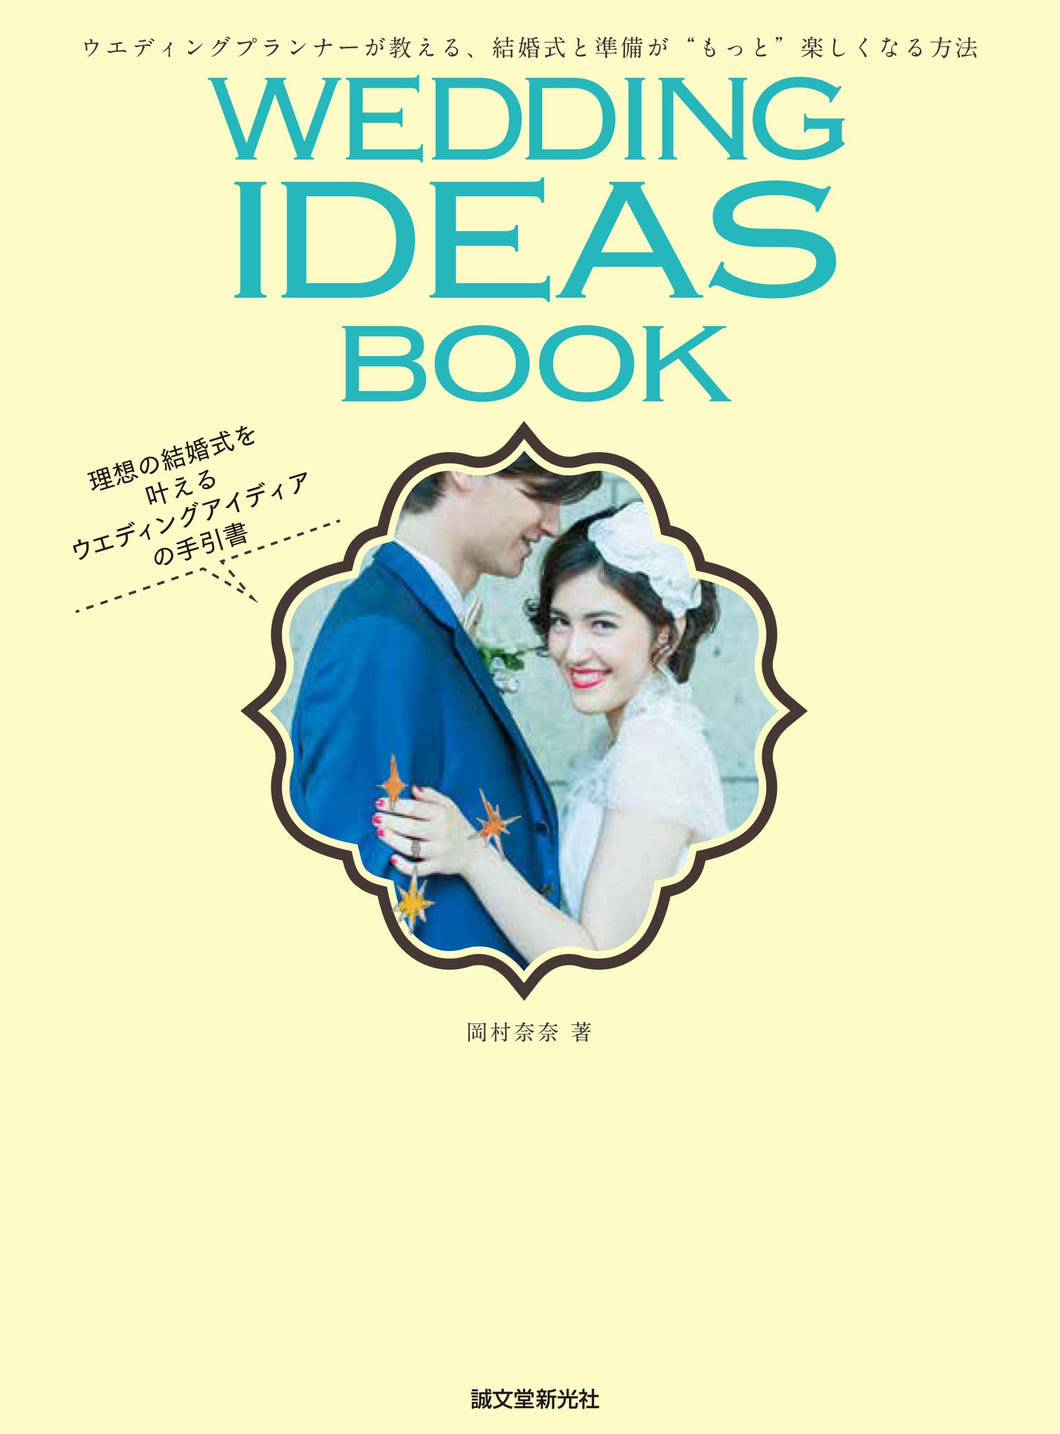 WEDDING IDEAS BOOK